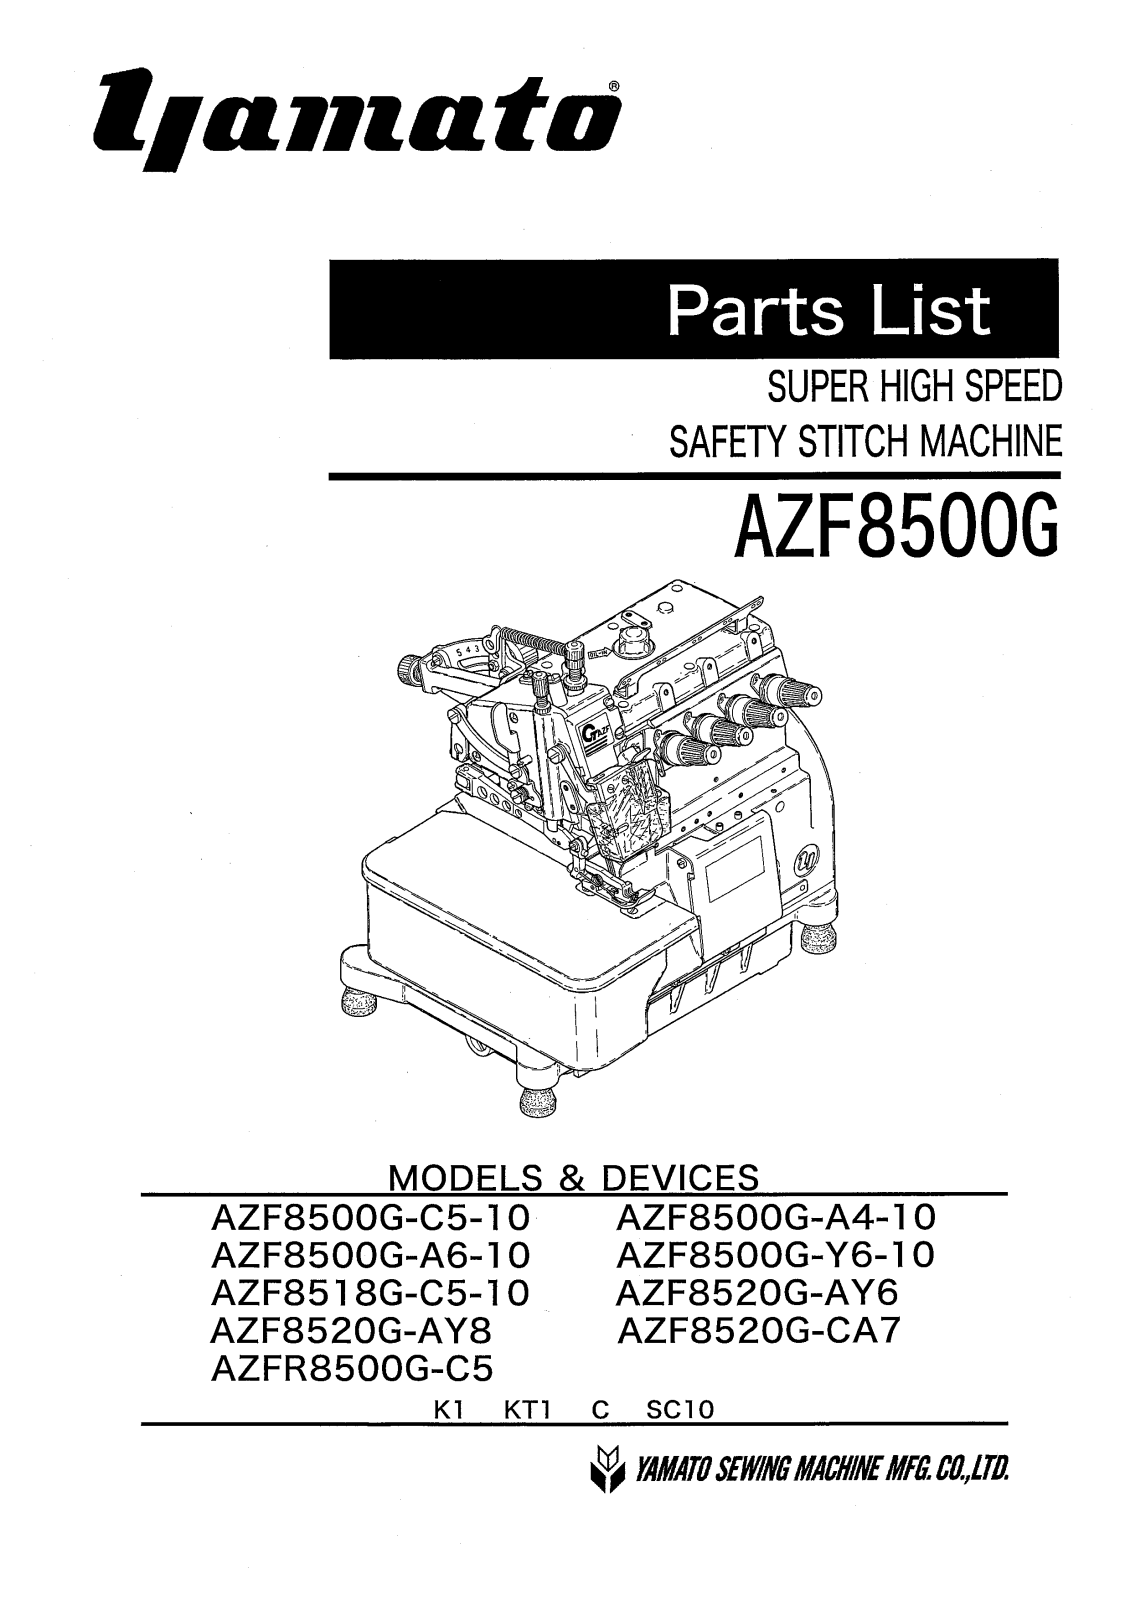 Yamato AZF8500G-C5-10, AZF8500G-A4-10, AZF8500G-A6-10, AZF8500G-Y6-10, AZF8518G-C5-10 Parts List